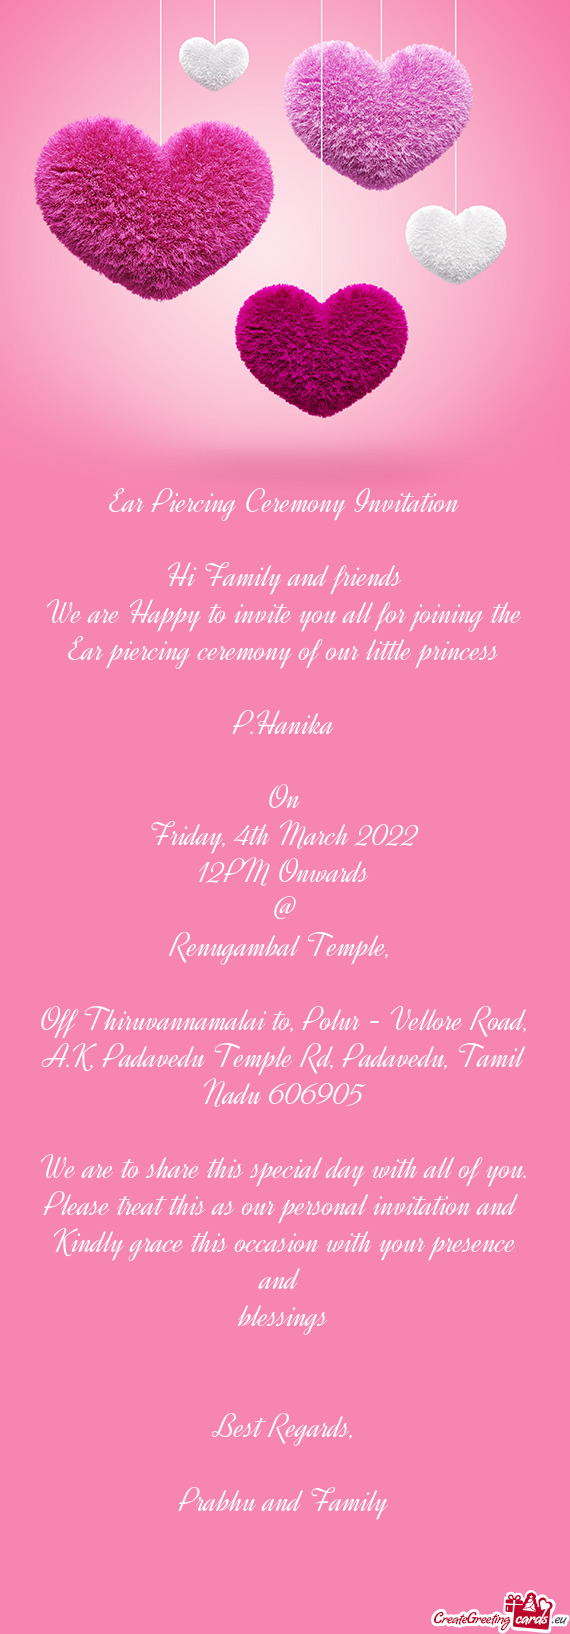 Off Thiruvannamalai to, Polur - Vellore Road, A.K, Padavedu Temple Rd, Padavedu, Tamil Nadu 606905